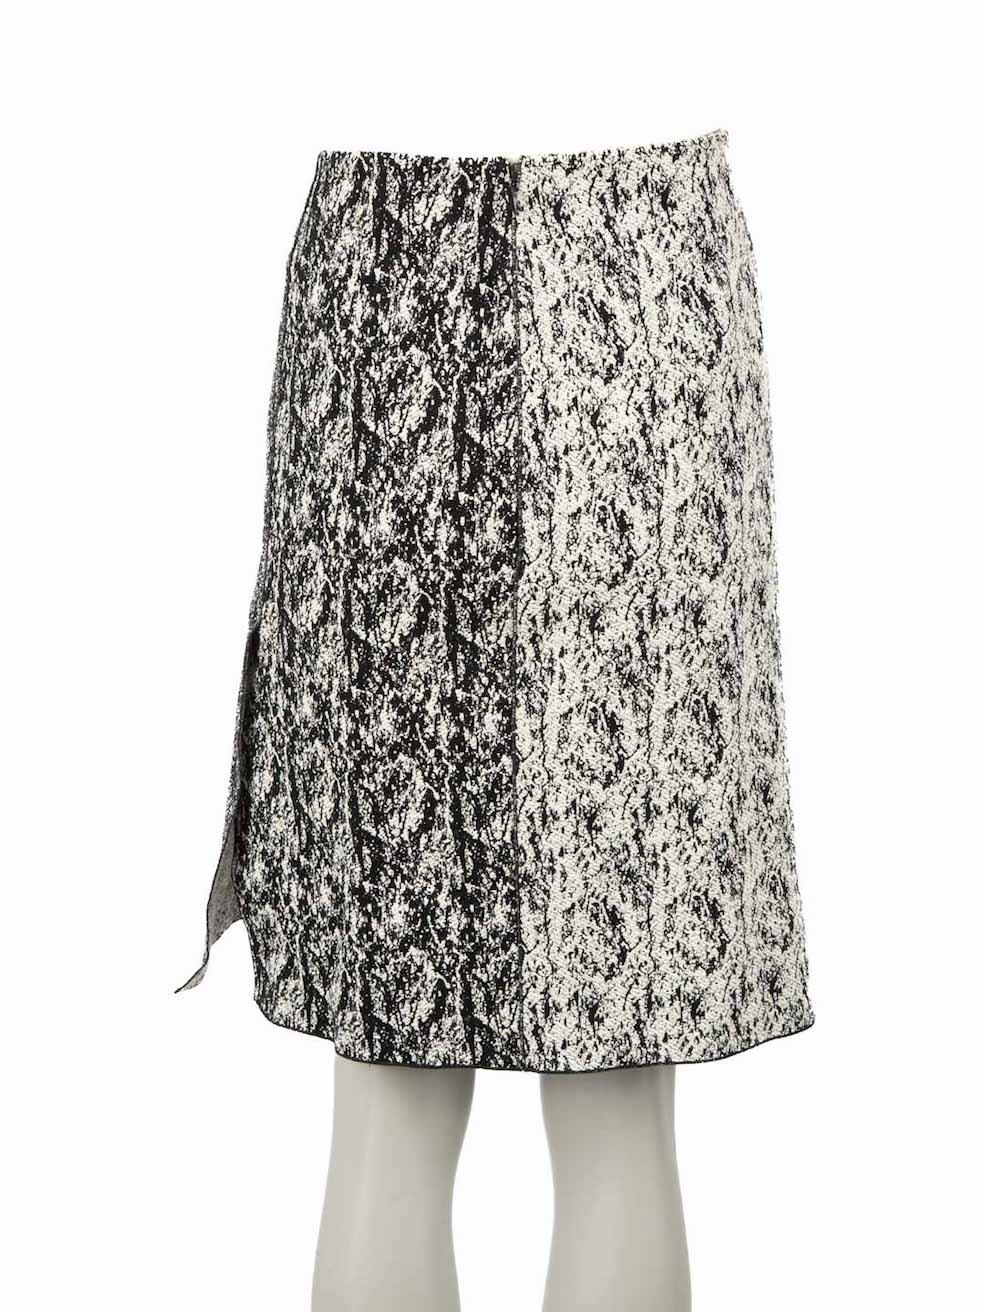 Black Celine Woven Panel Skirt Size L For Sale